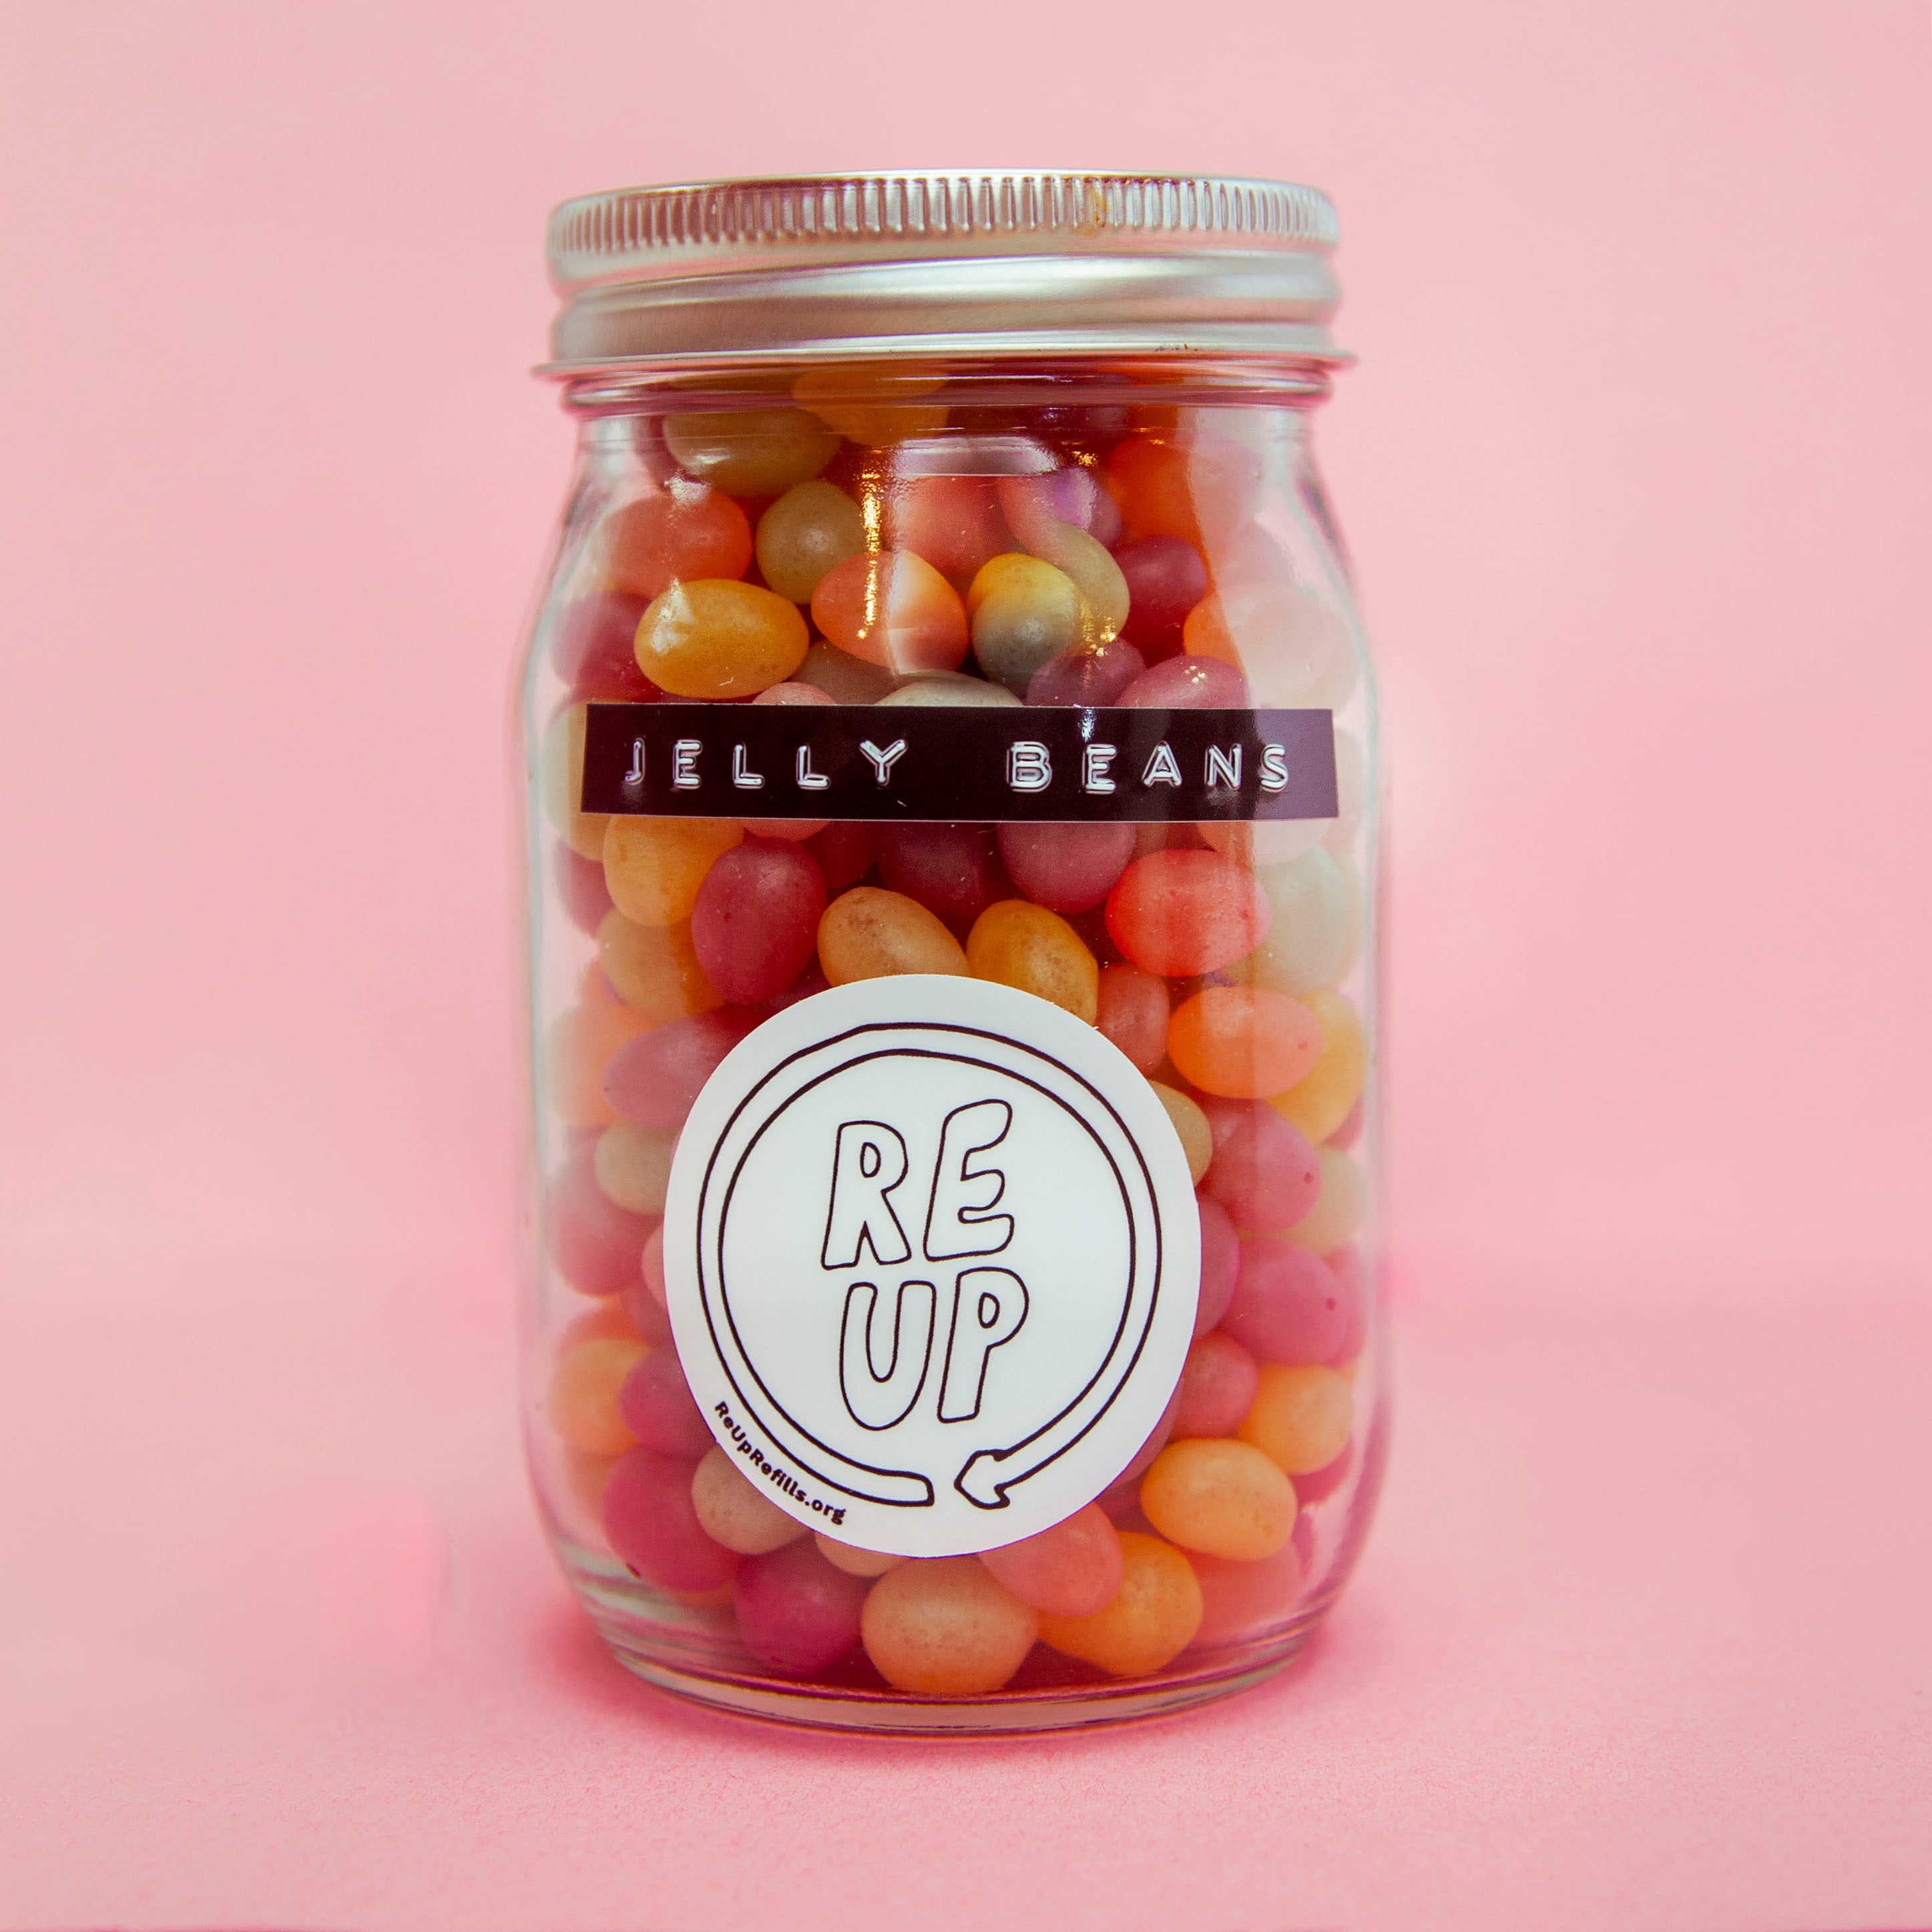 Organic Jelly Beans